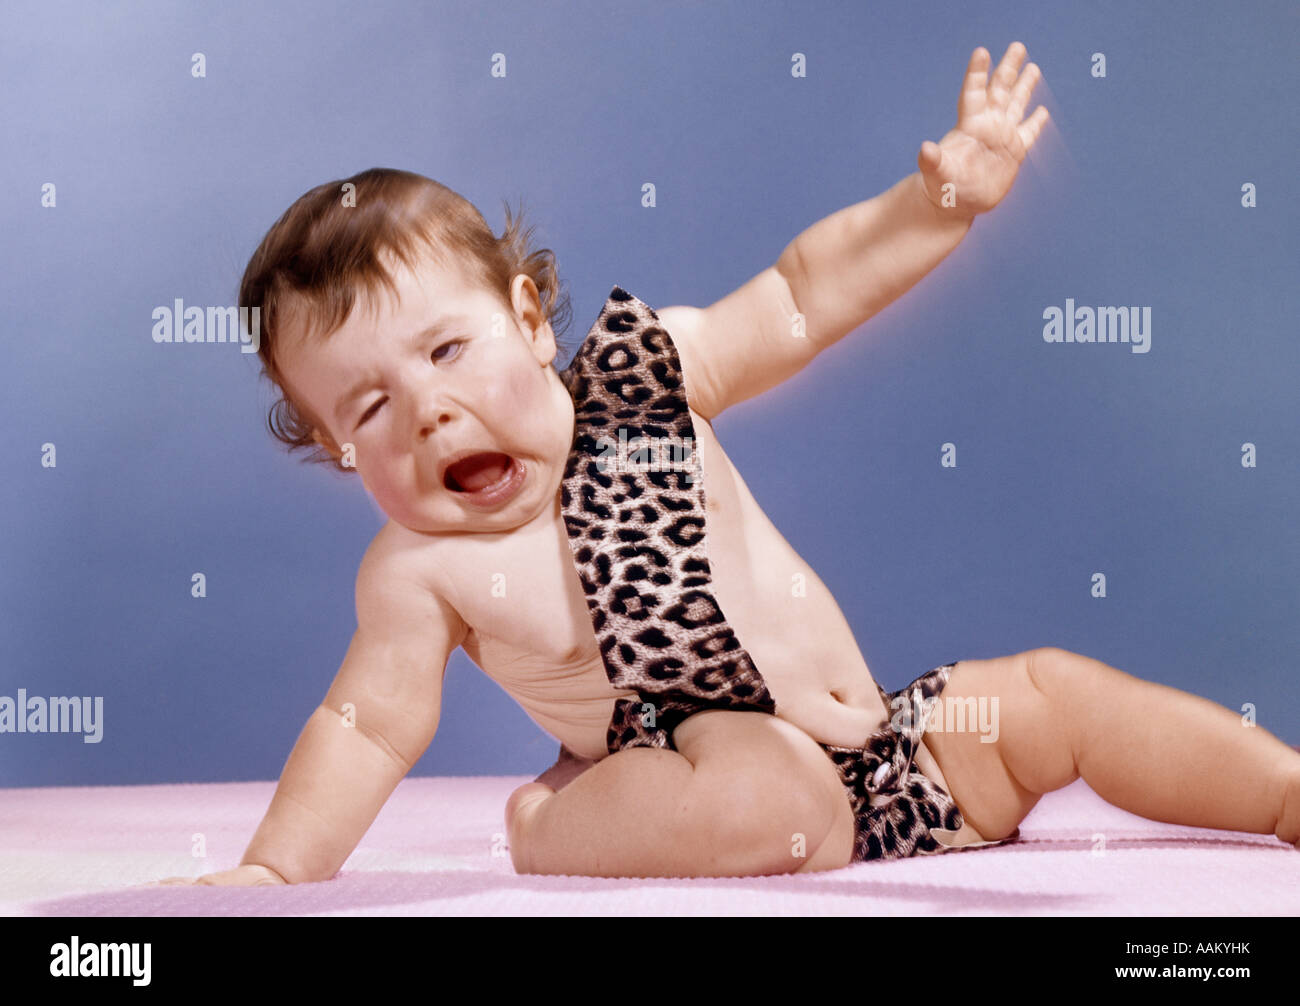 BABY IN LEOPARD HAUT TARZAN KOSTÜM MIT EIGENARTIGEN GESICHTSAUSDRUCK STUDIO BIZARR Stockfoto